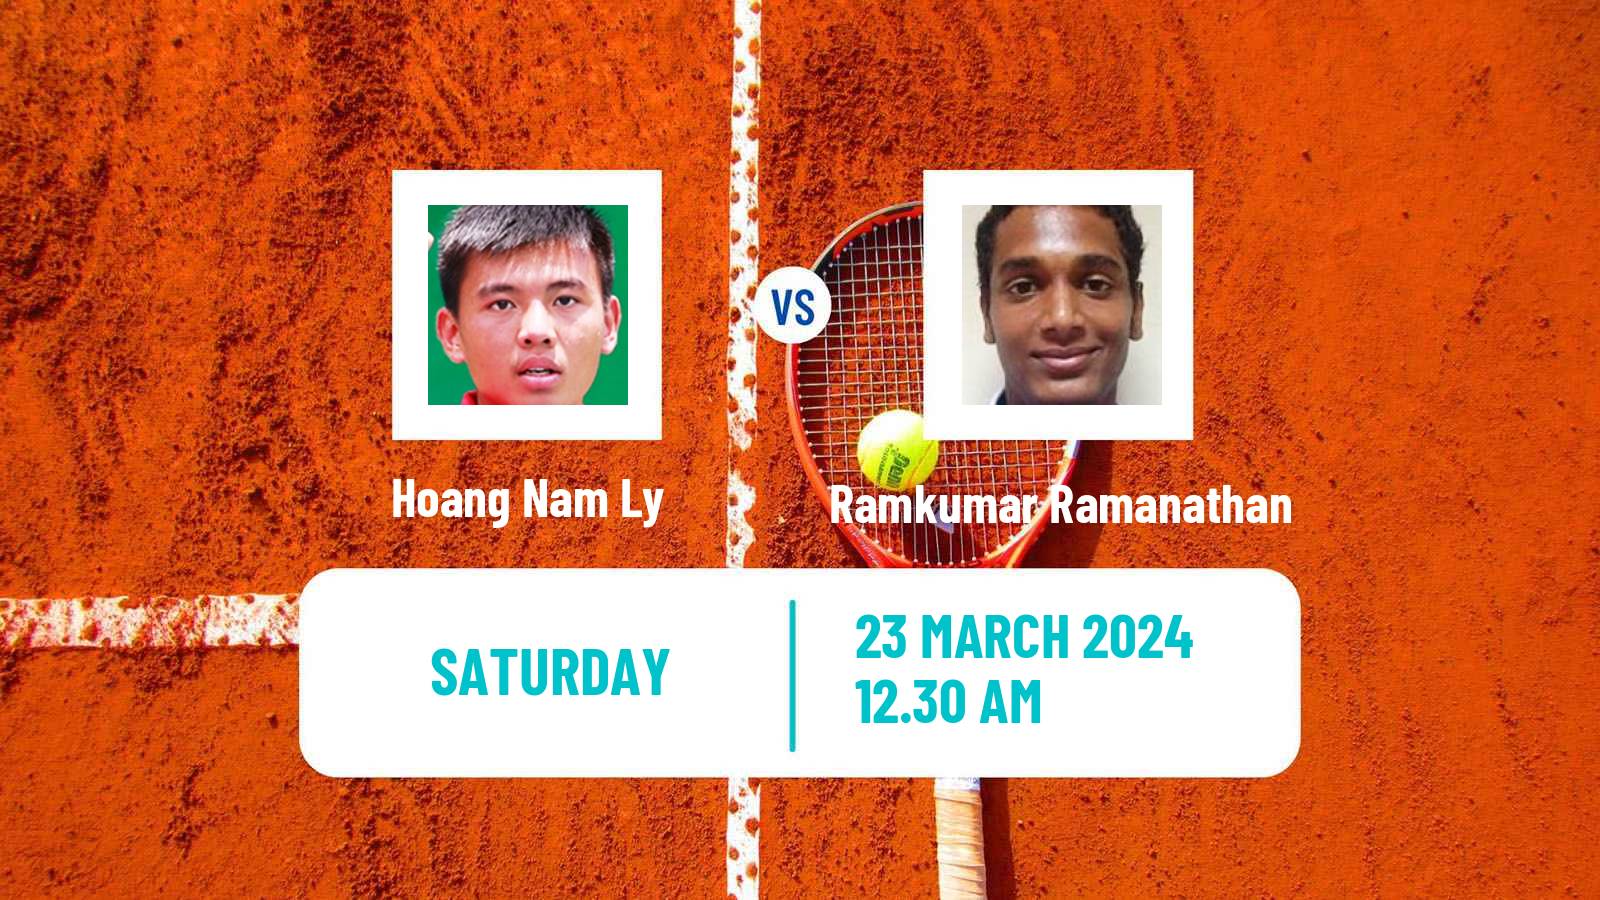 Tennis ITF M15 Chandigarh Men Hoang Nam Ly - Ramkumar Ramanathan